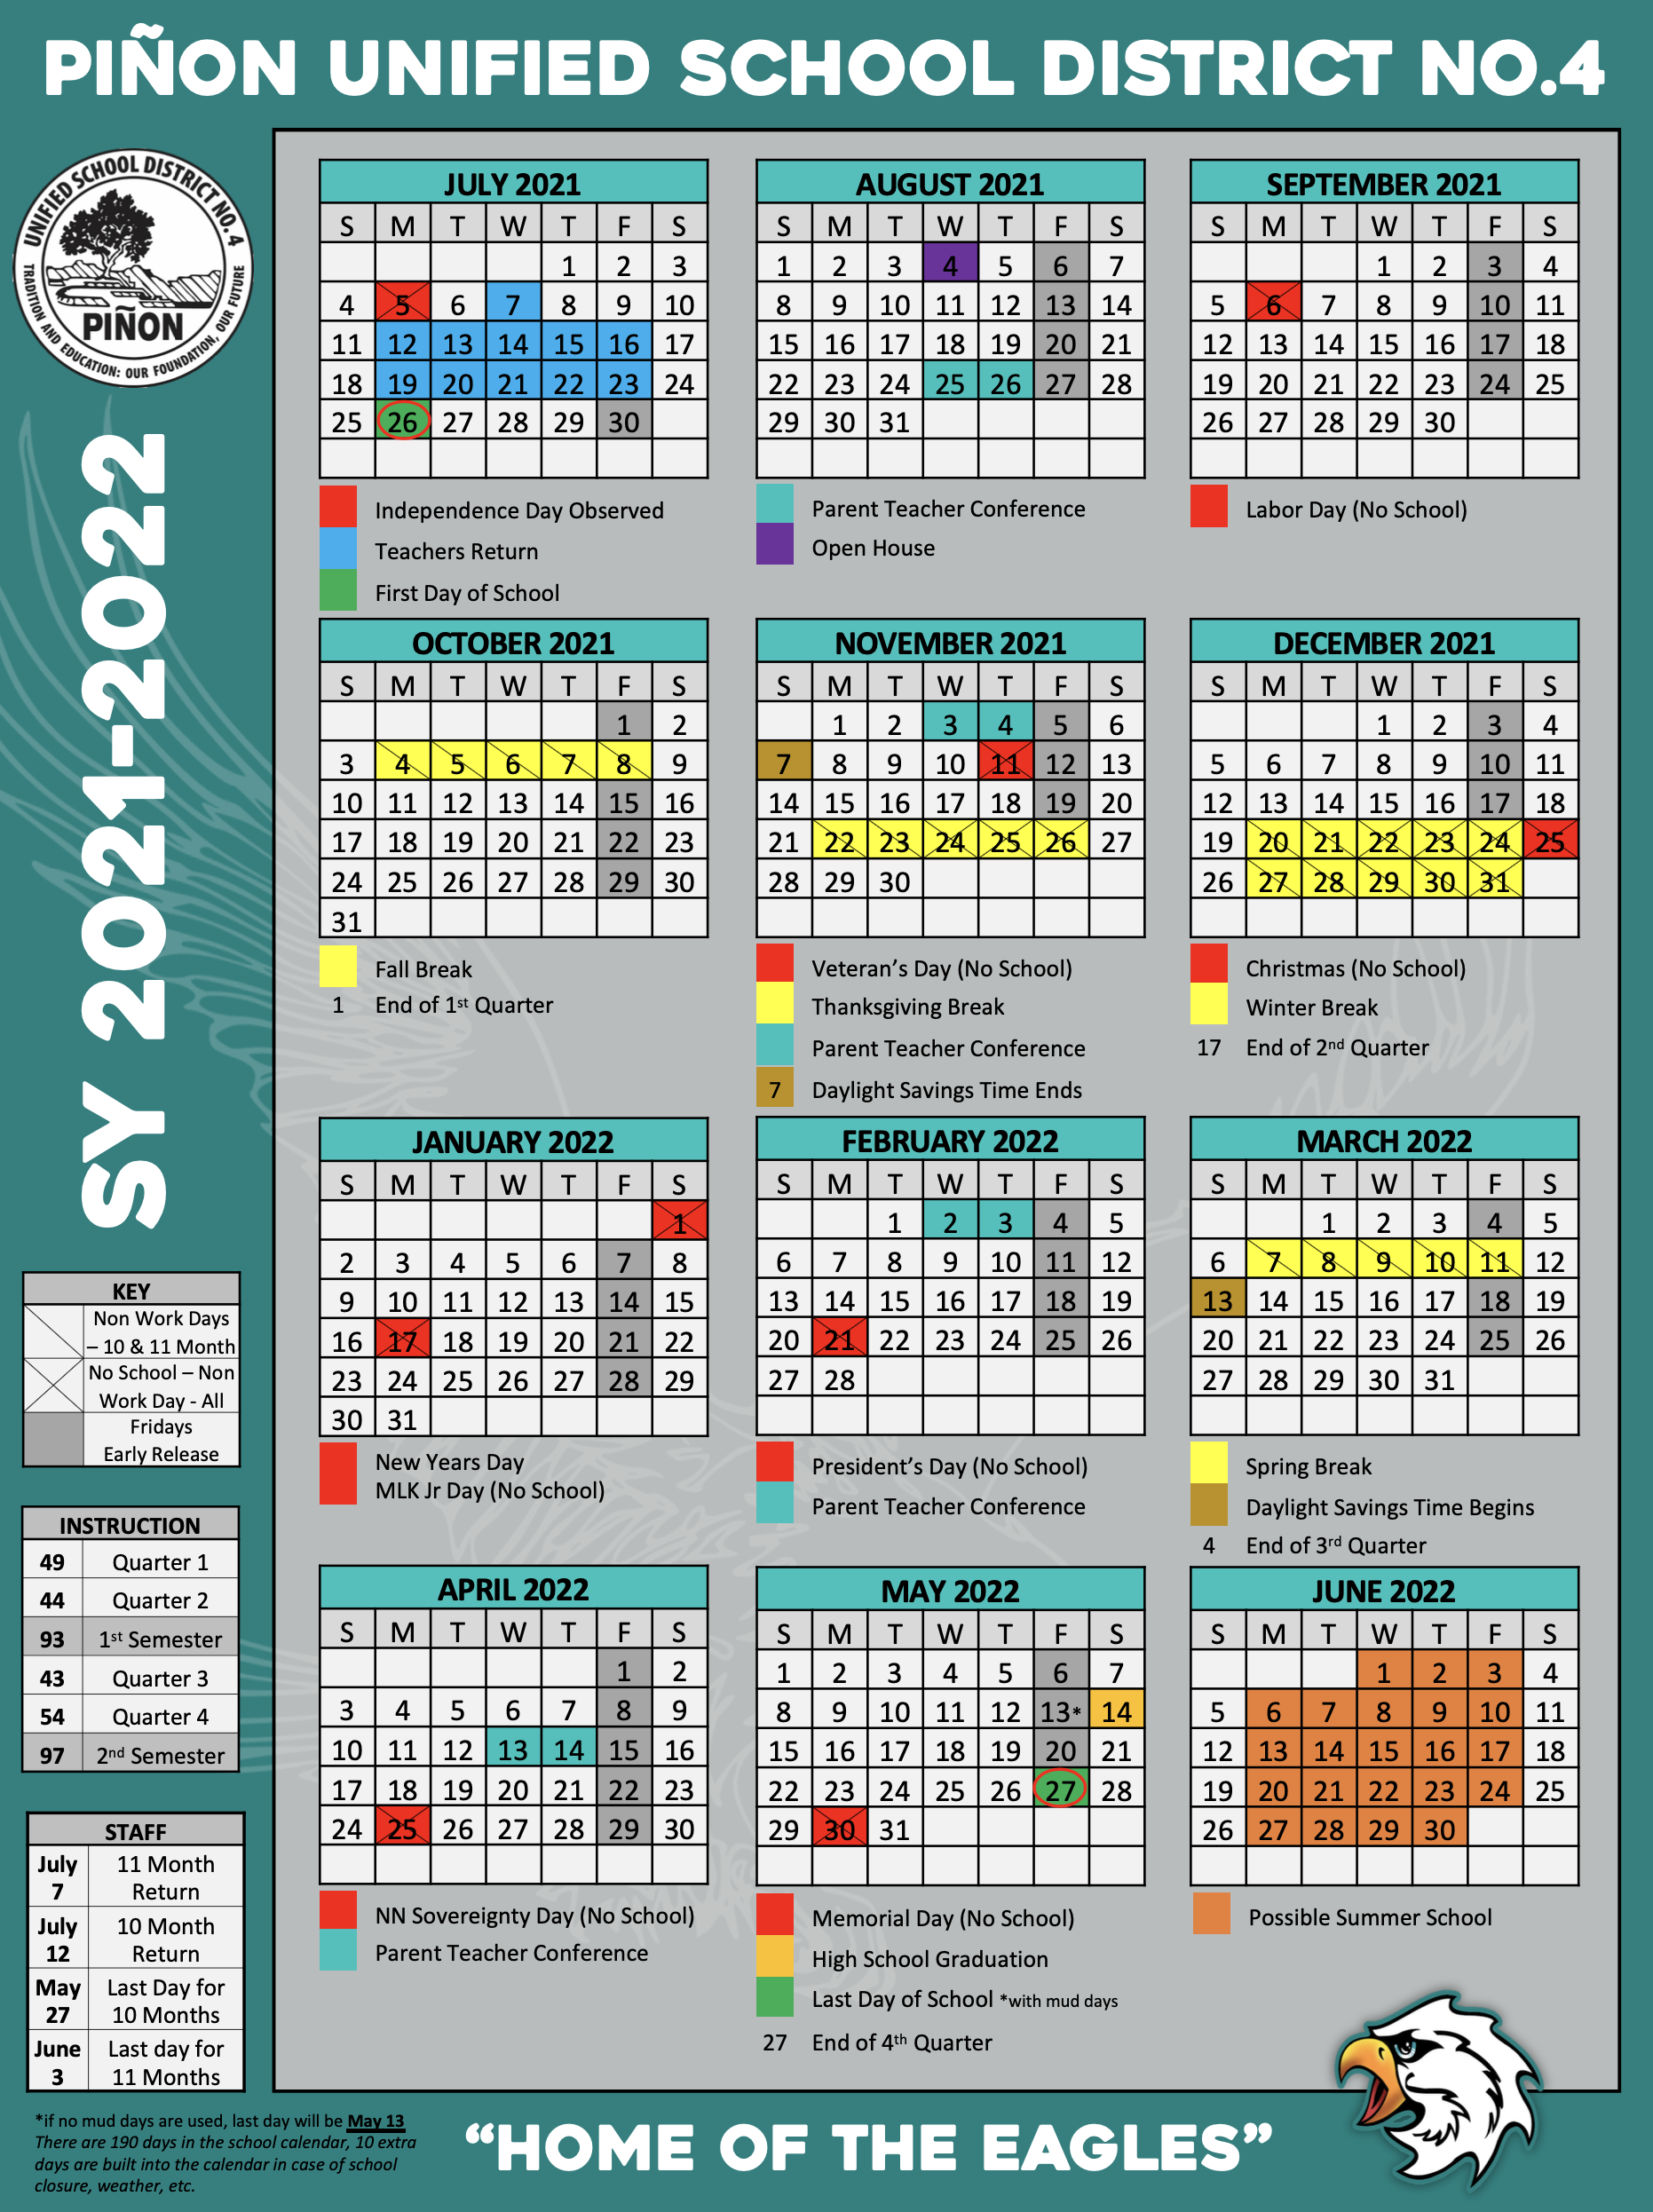 Poway Usd Calendar 2022 School Year Calendars | Piñon Unified School District